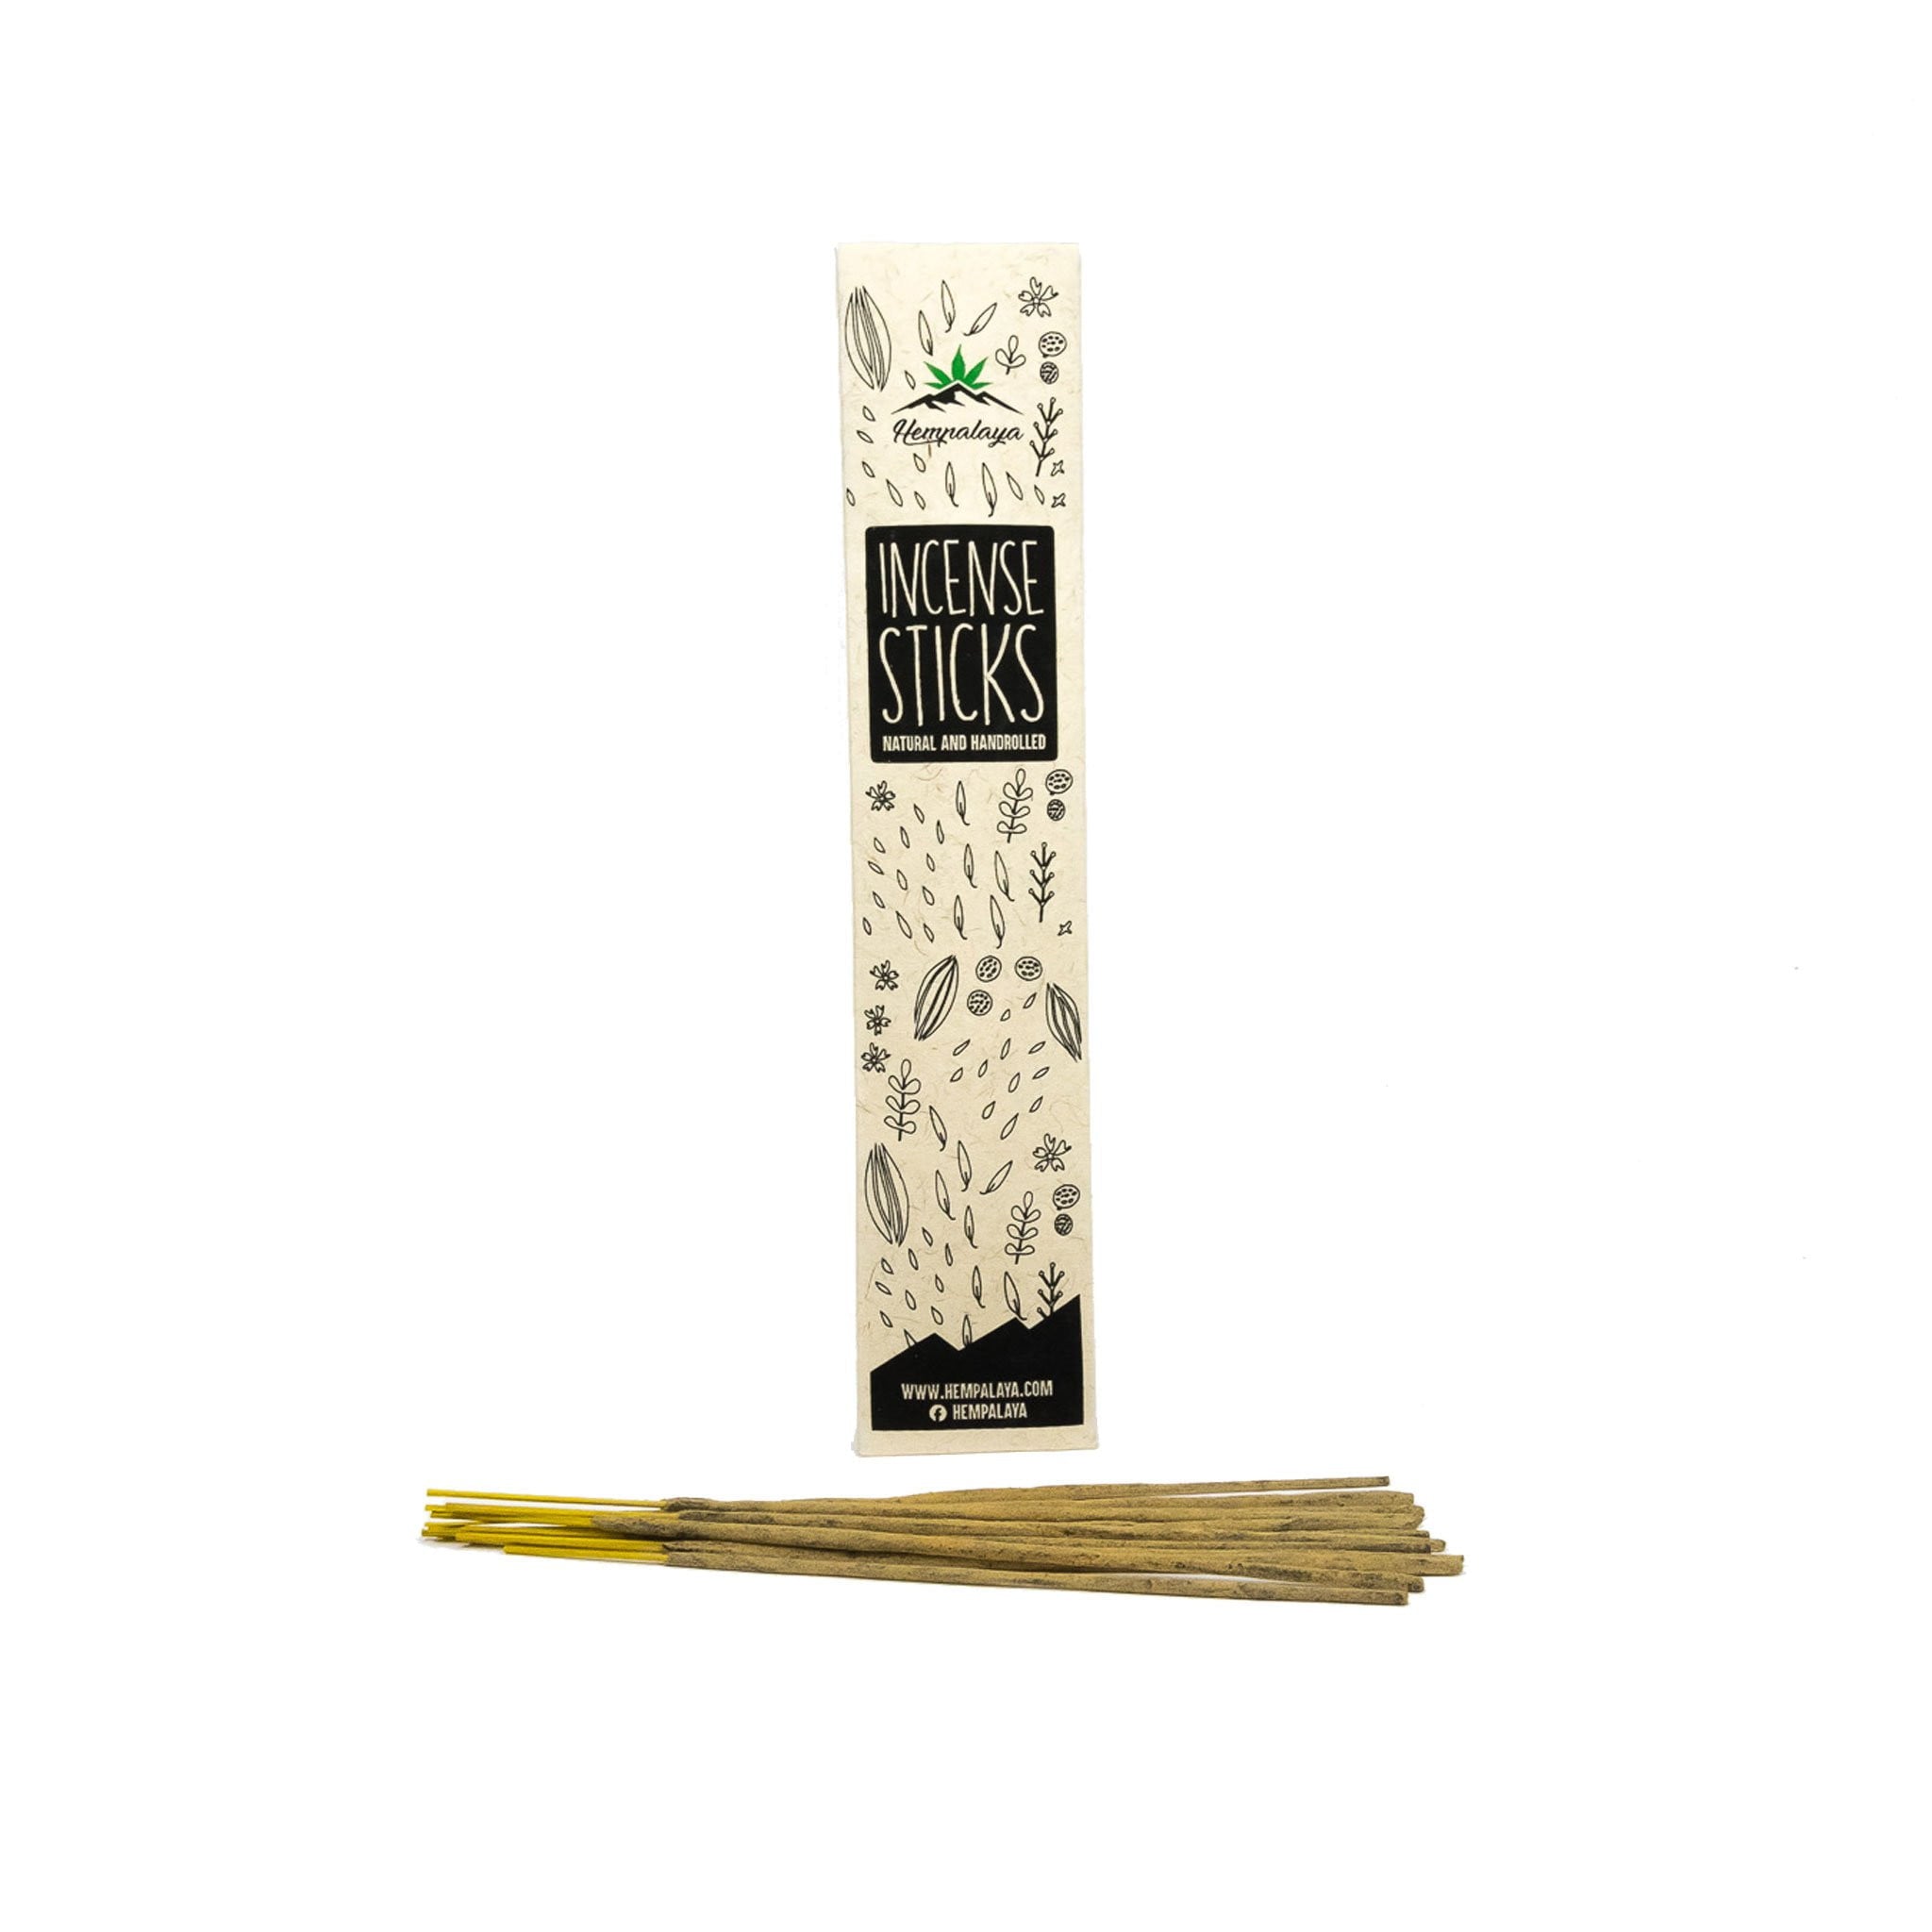 Handrolled incense sticks - Hempalaya